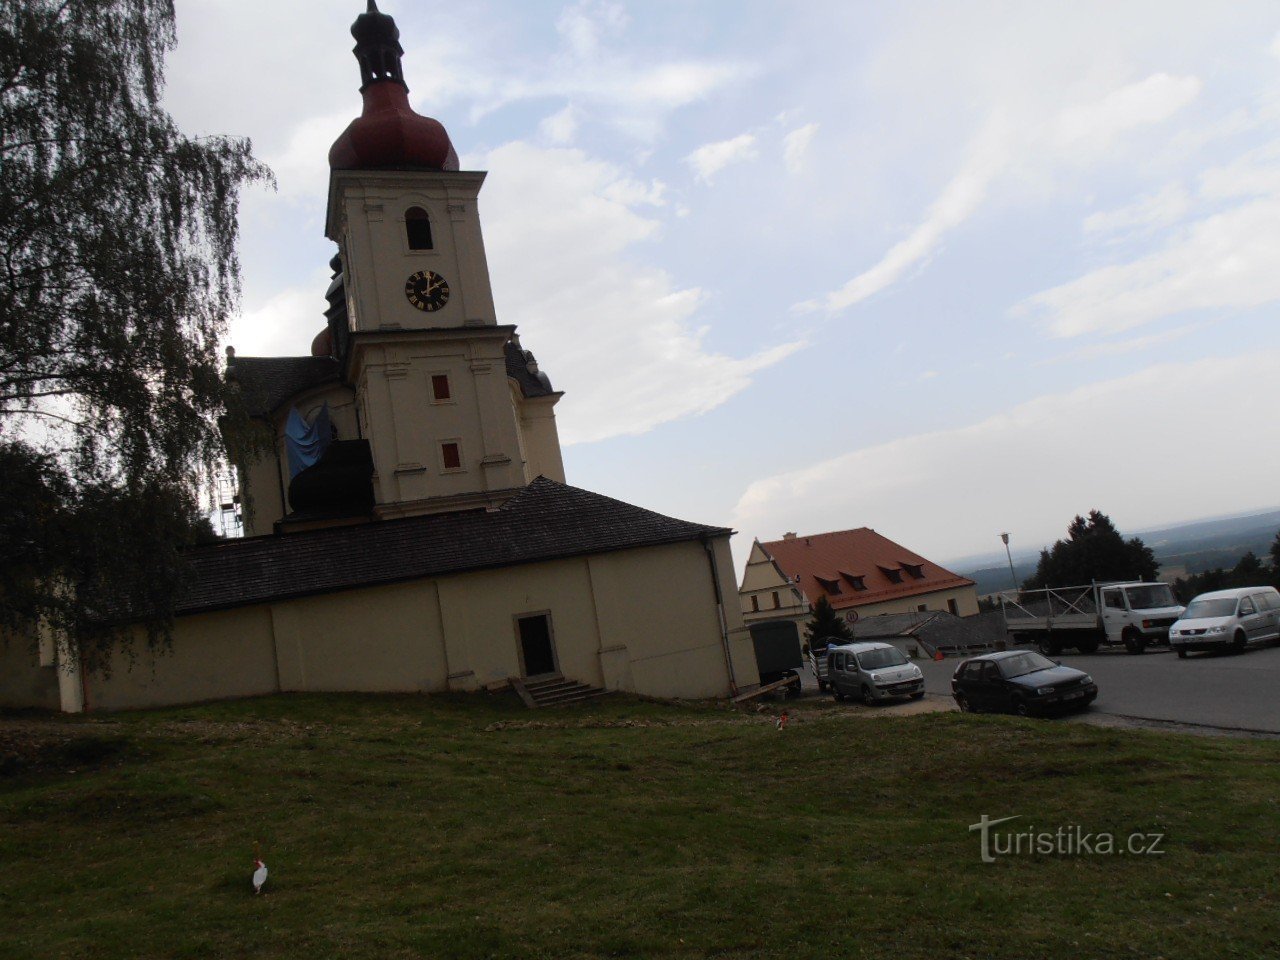 Nhà thờ Baroque của Đức Mẹ Đồng trinh ở Dobrá Voda gần Horní Stropnice ở Novohradsk